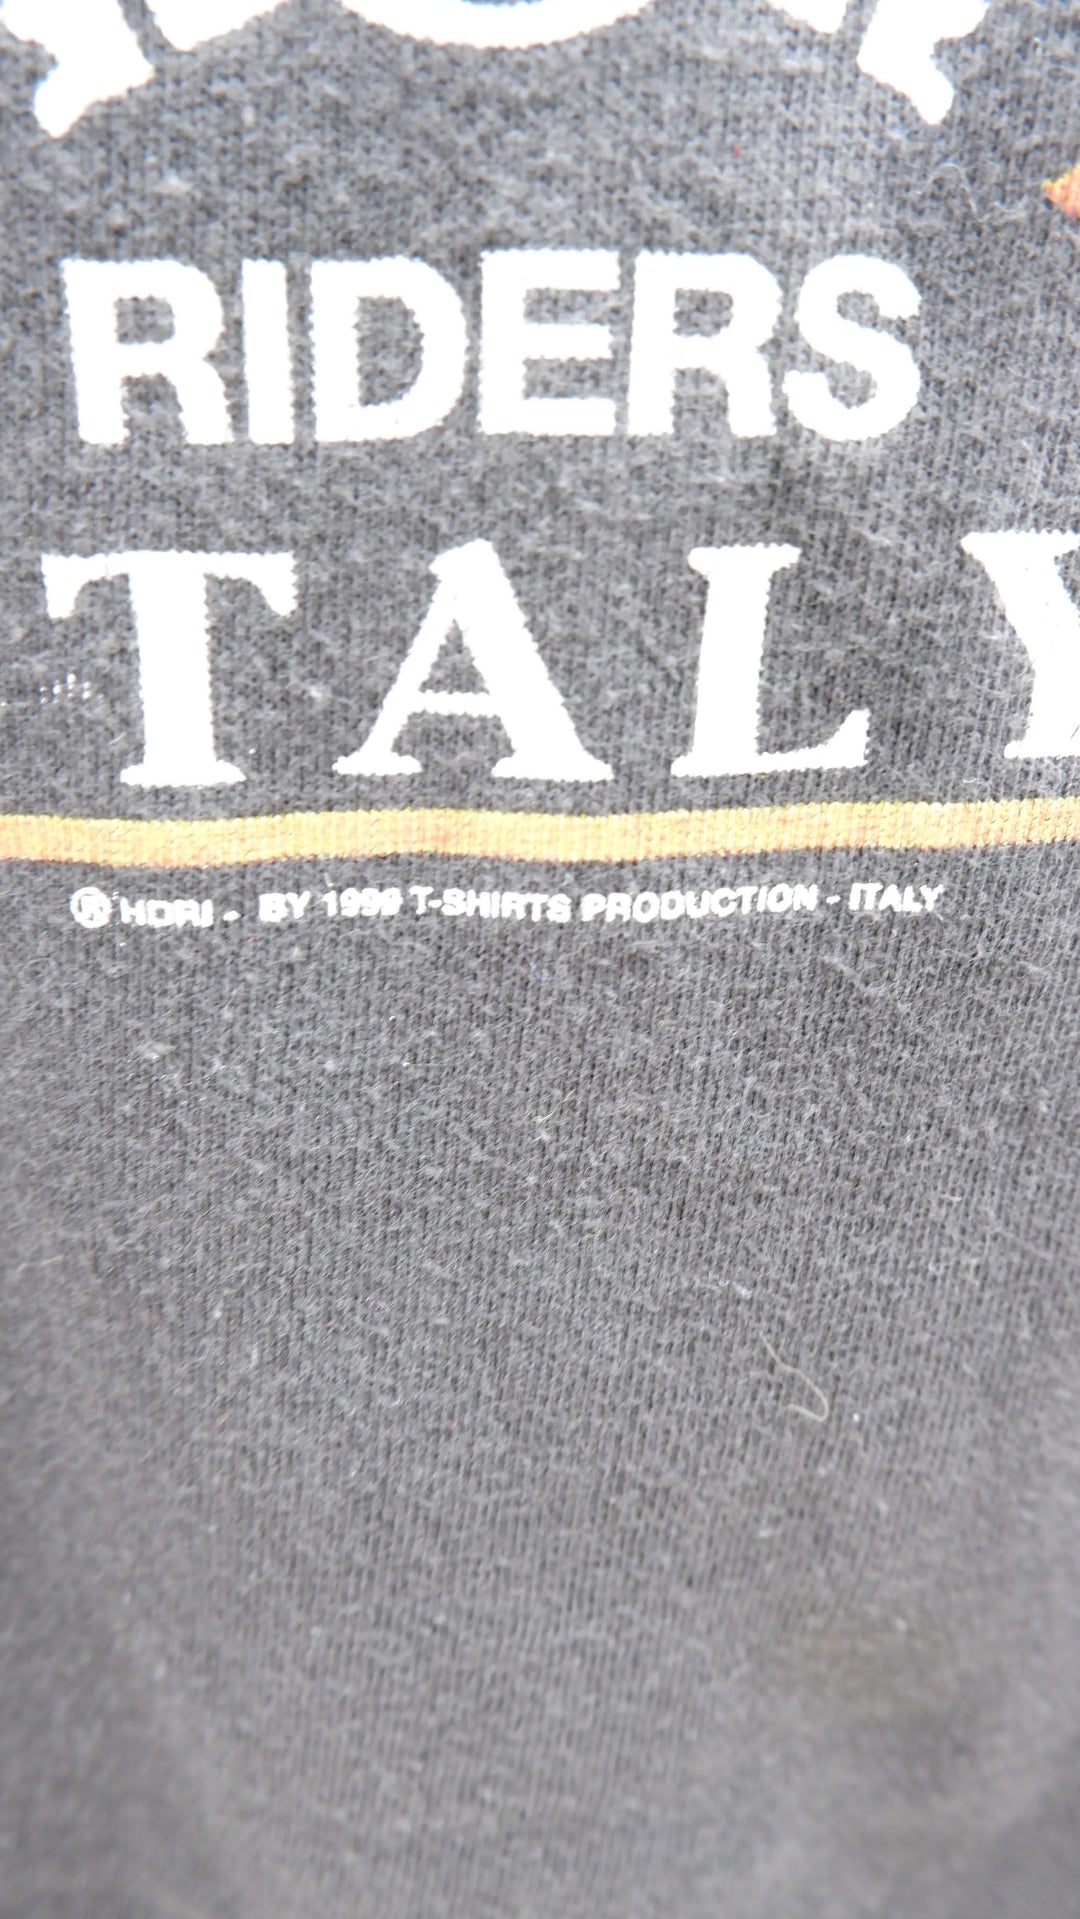 1999 Harley Davidson Riders Italy Vintage T-Shirt